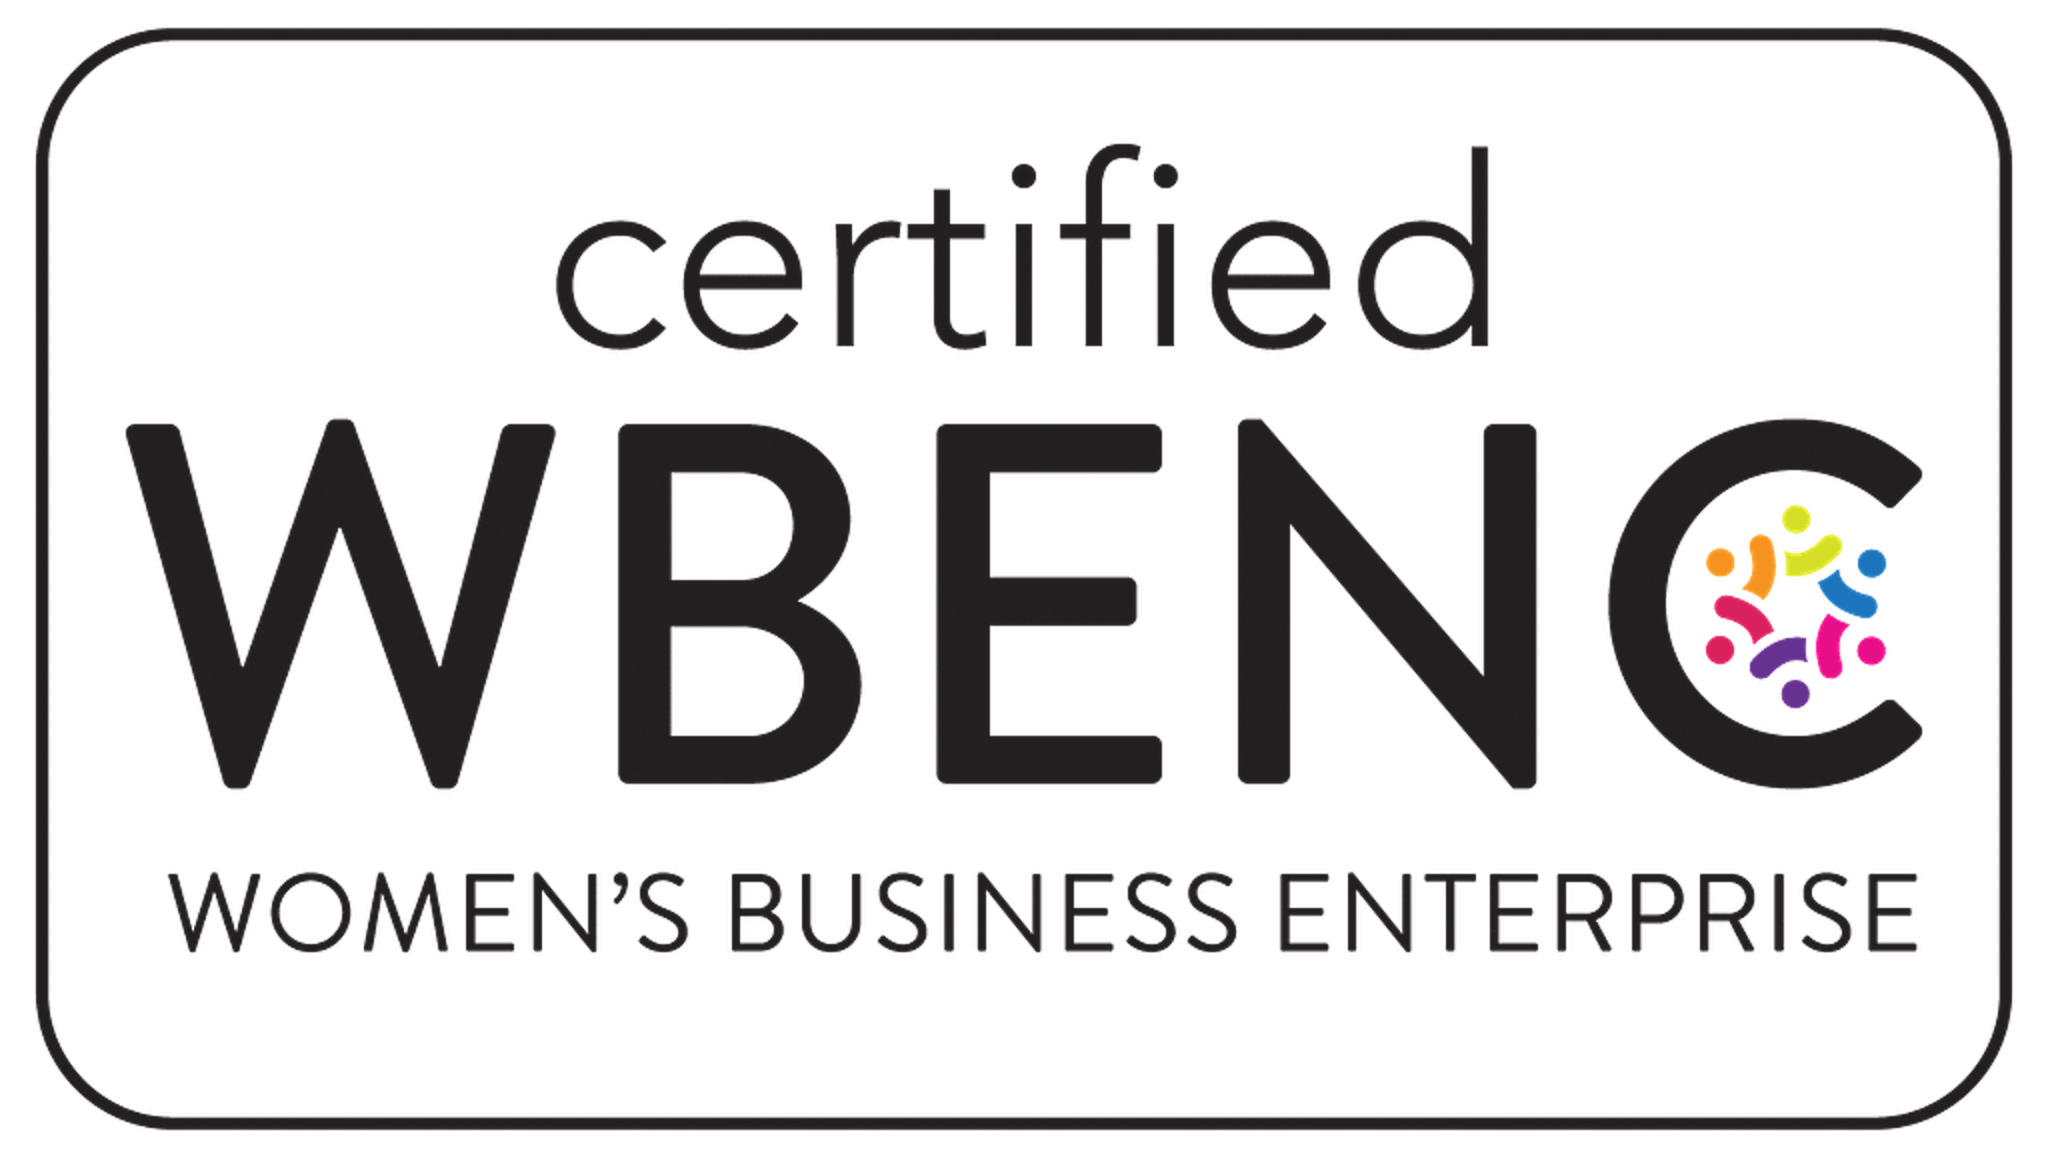 WBENC certification logo